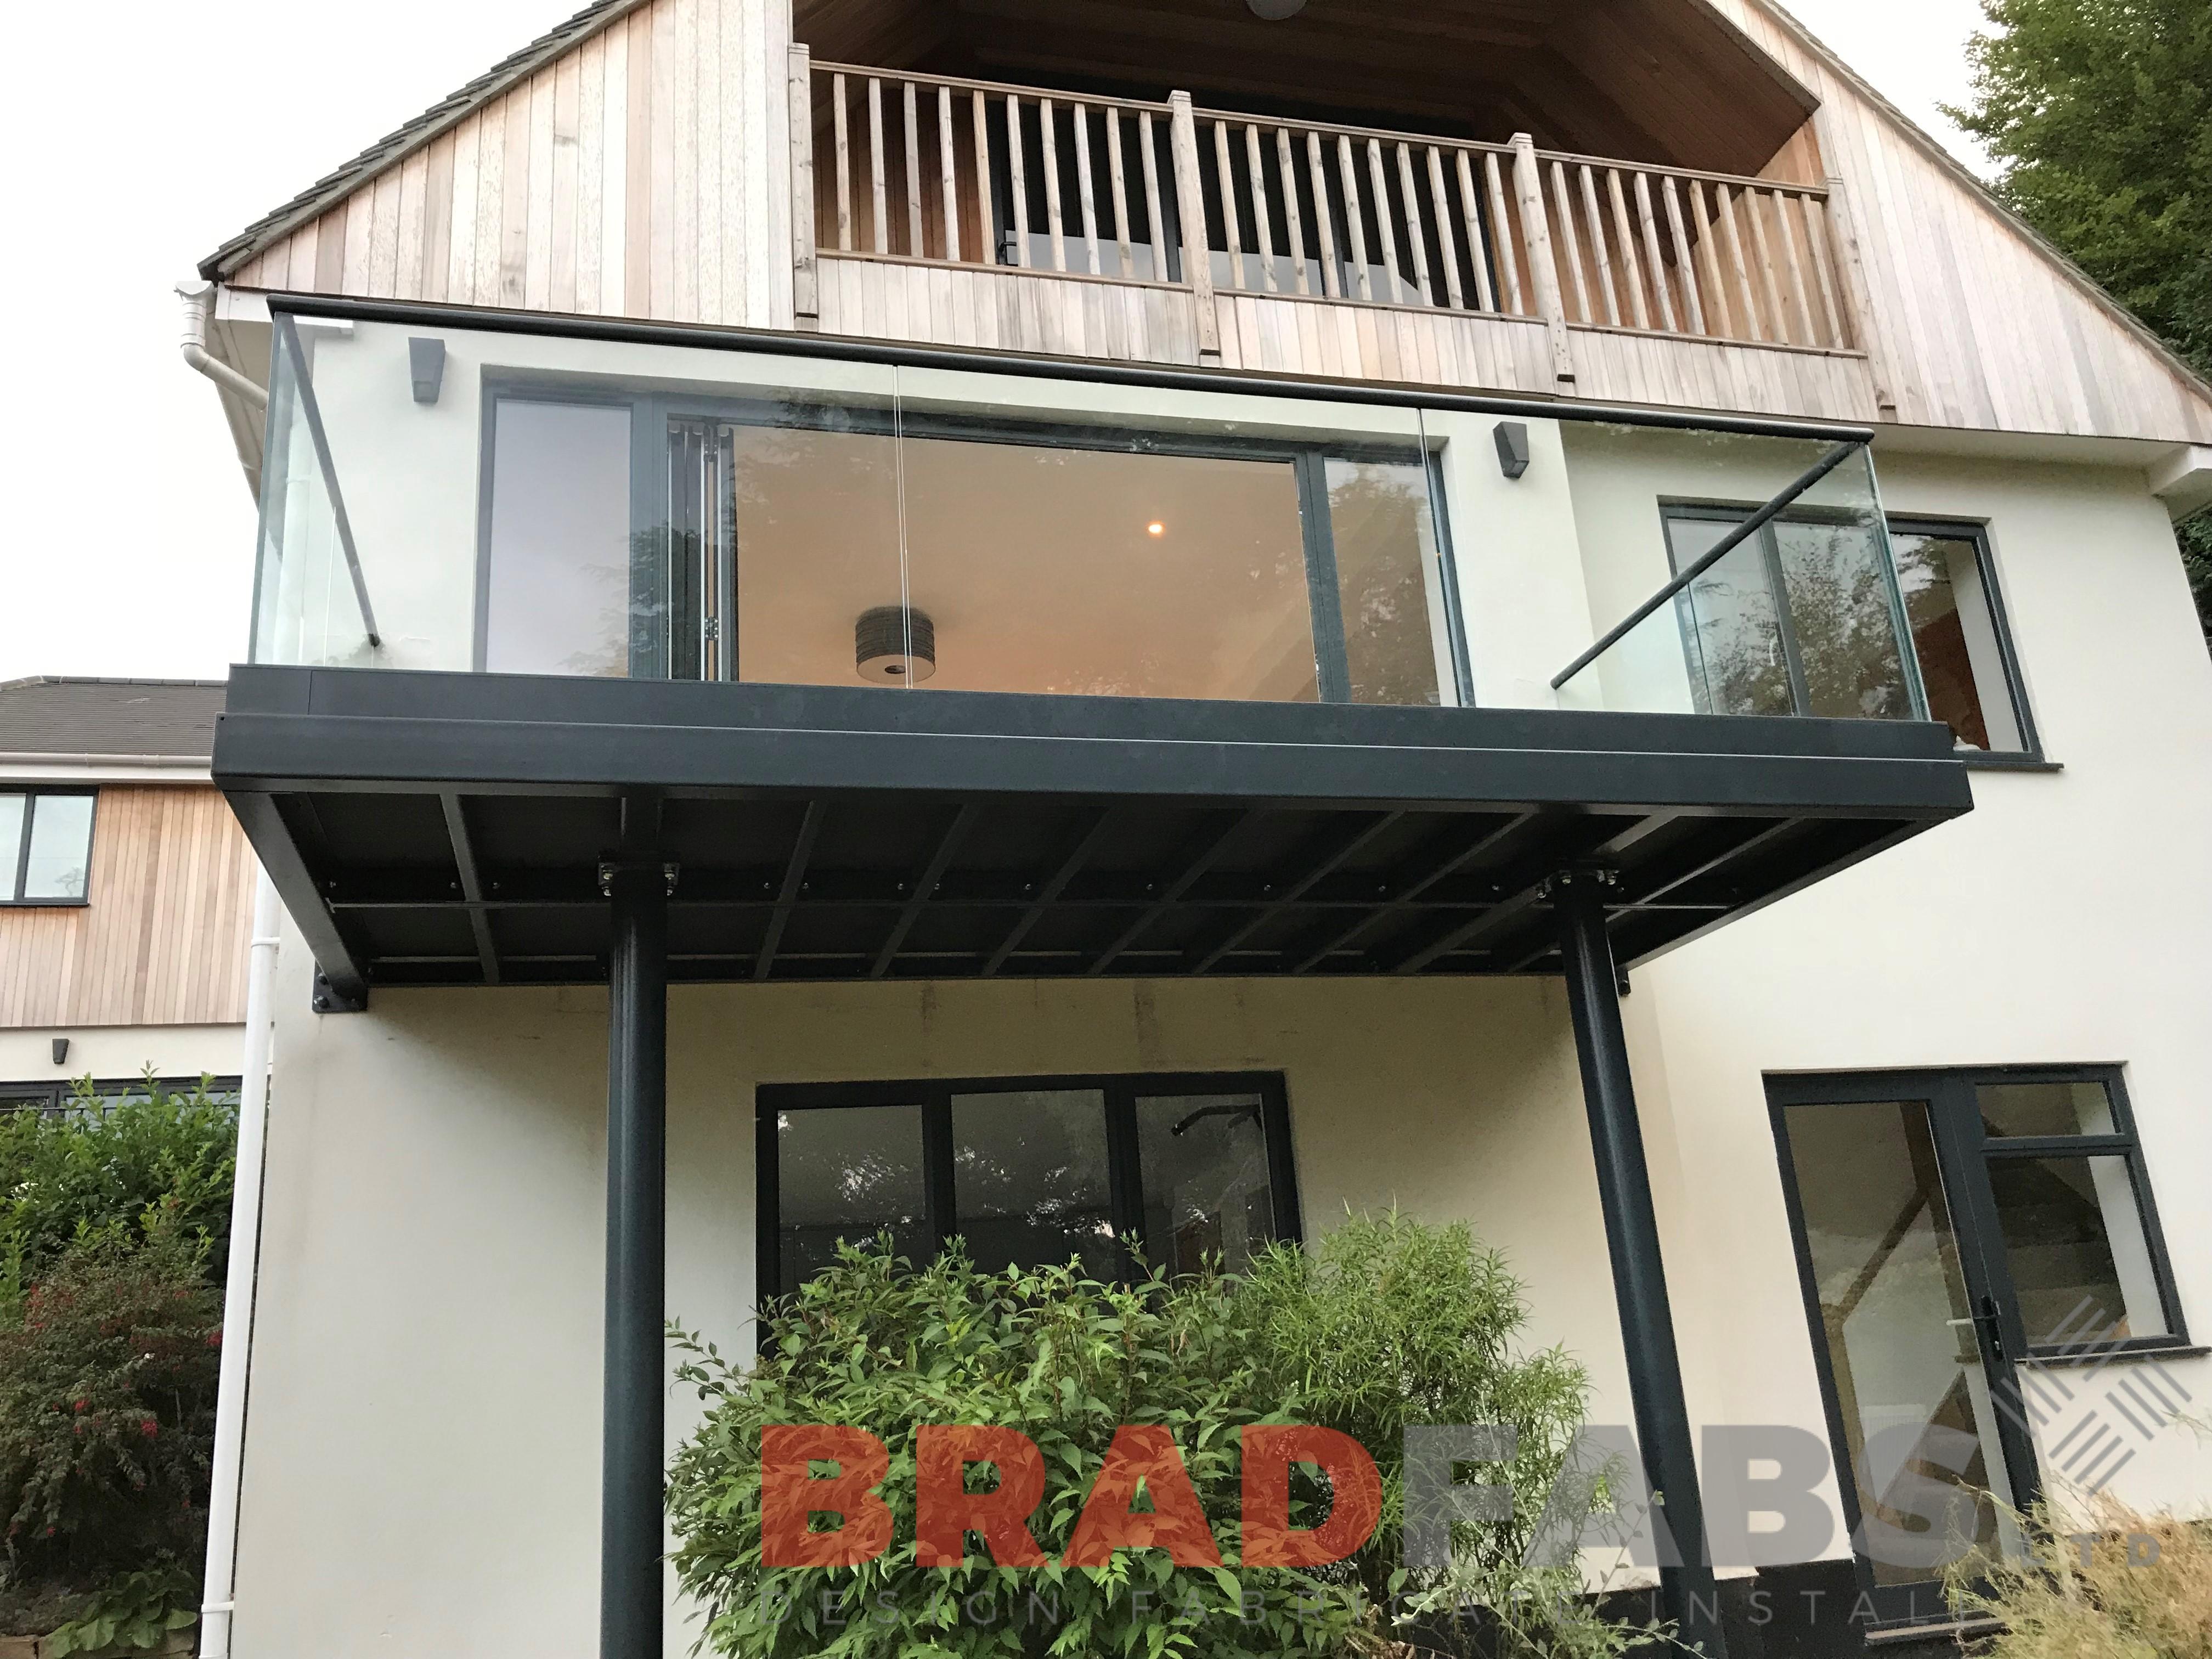 Bespoke designed metal and infinity glass balcony by Bradfabs